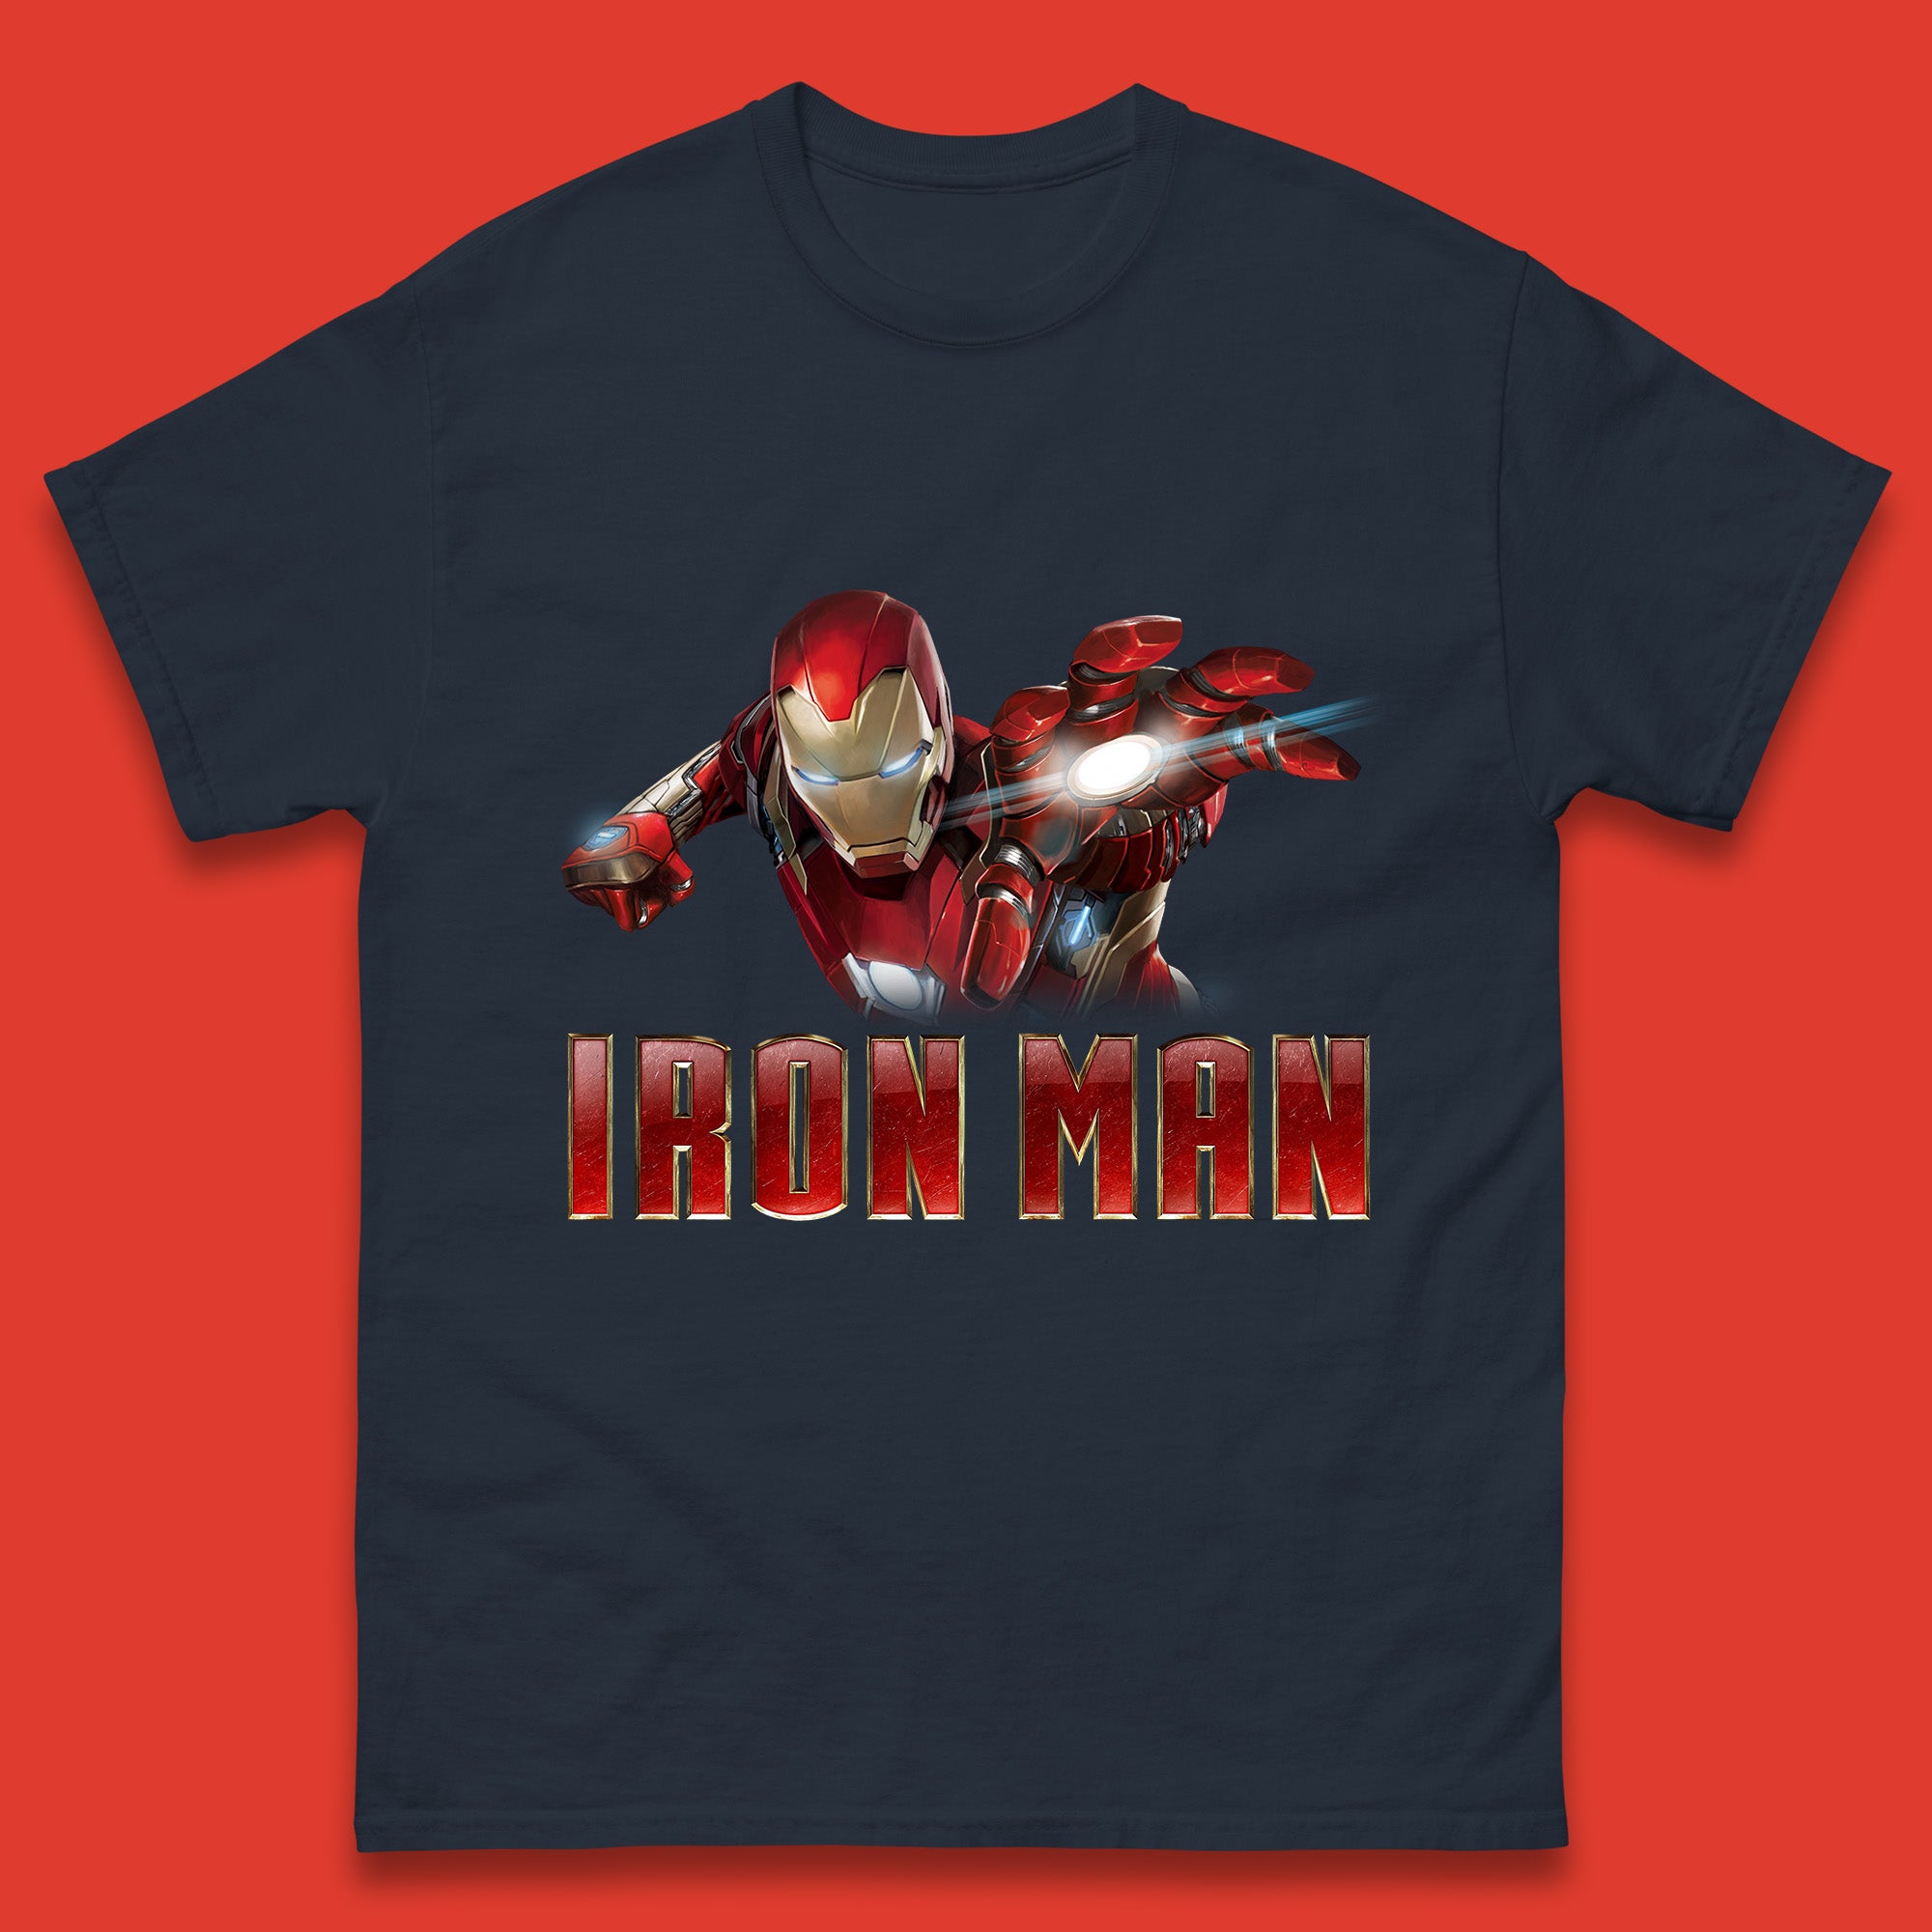 Iron Man Superhero Marvel Avengers Comic Book Character Flaying Iron-Man Marvel Comics Mens Tee Top